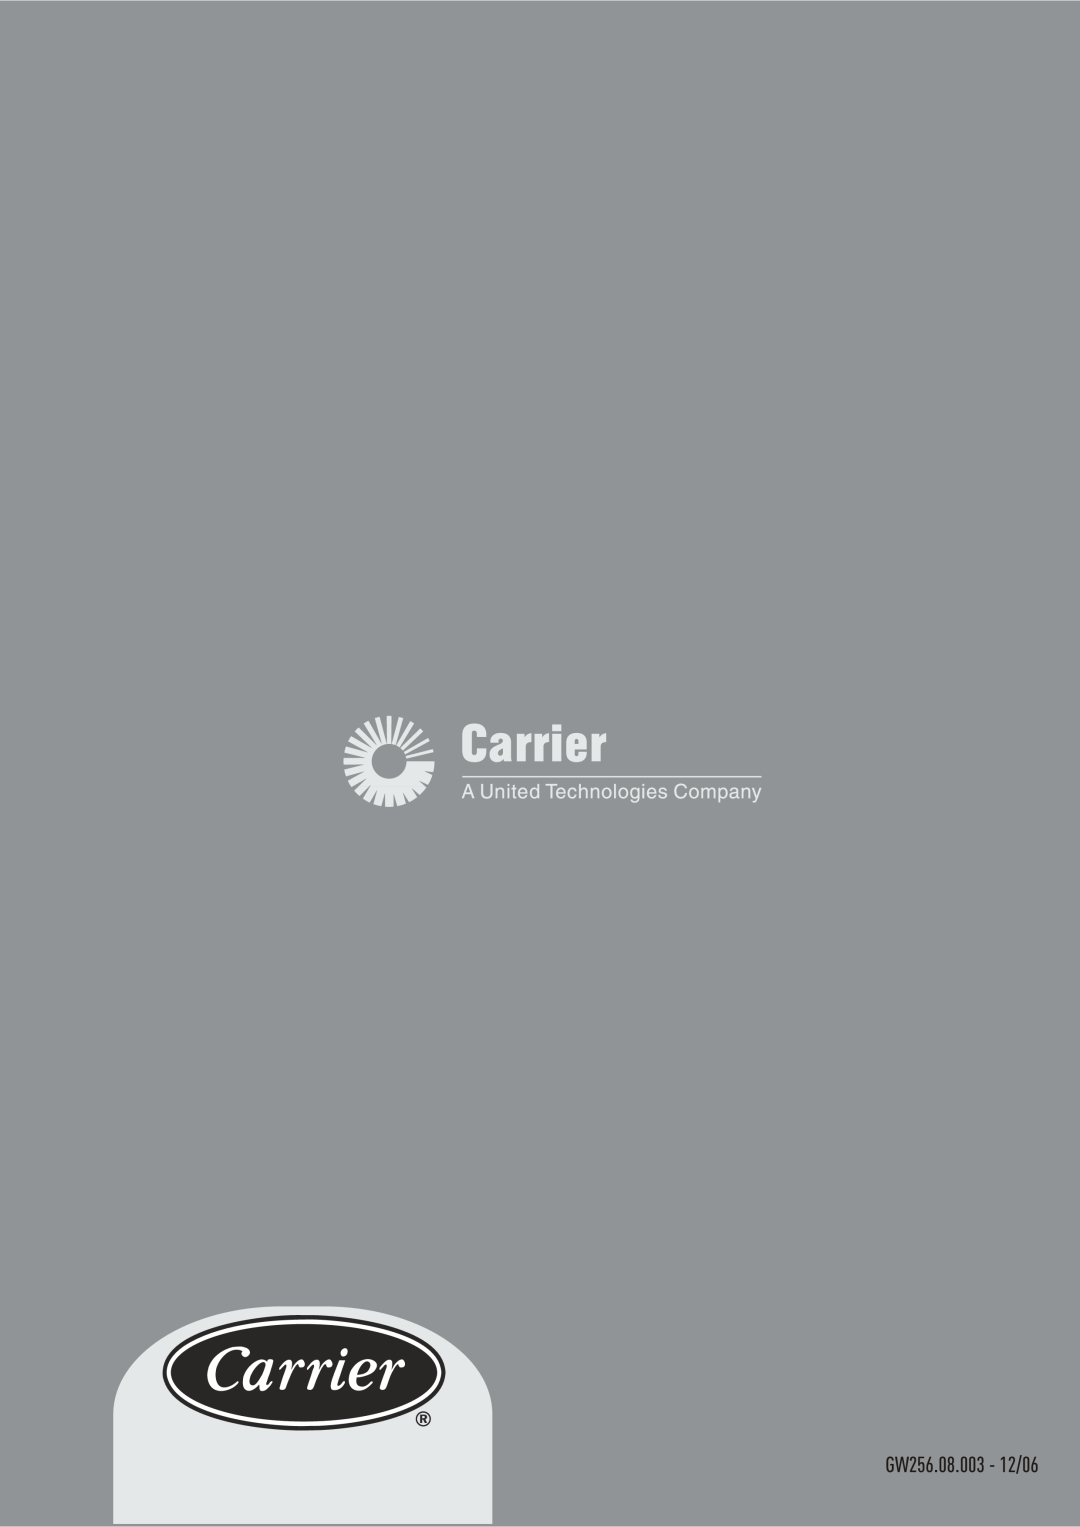 Carrier ZC manual GW256.08.003 - 12/06 